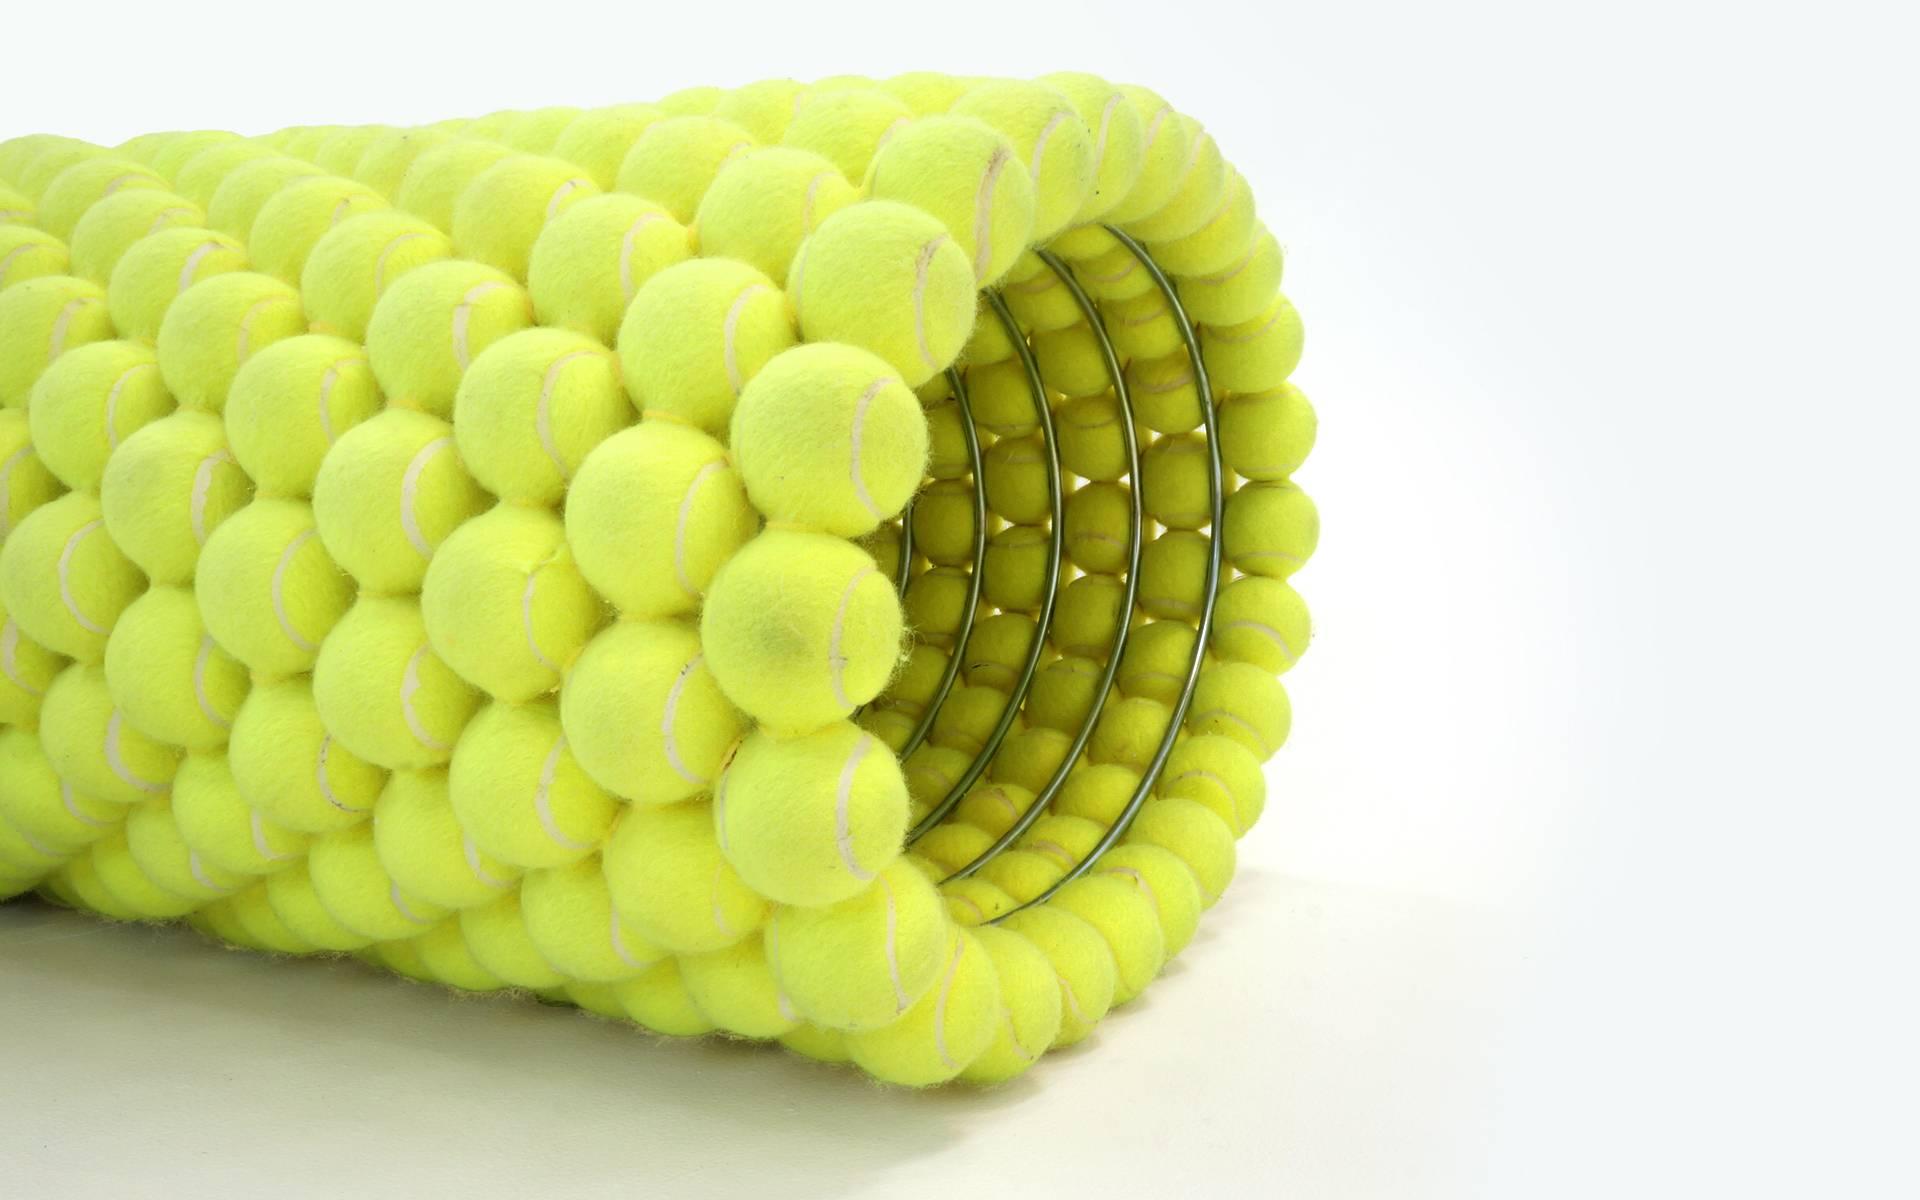 Danish Tennis Ball Bench Designed by Tejo Remy & Rene Veenhuizen